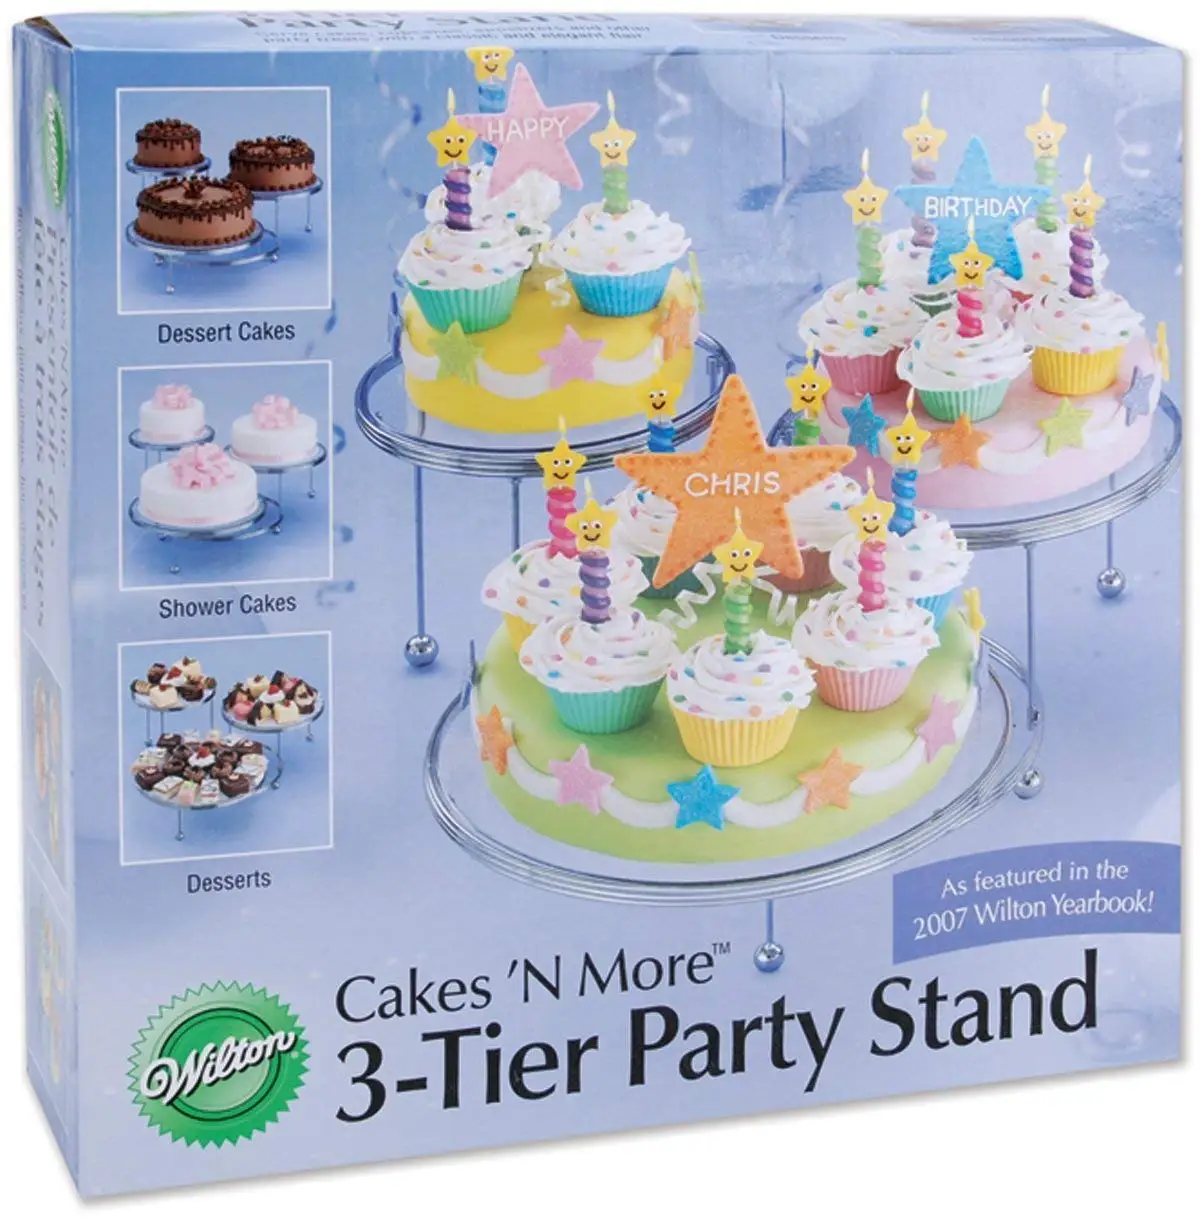 Gold Disserts Wedding Cakes Used For Displaying Cupcakes Fondant Cake Display Stand 12 Inch Wedding Properties,Naomi Osaka Maternal Grandparents